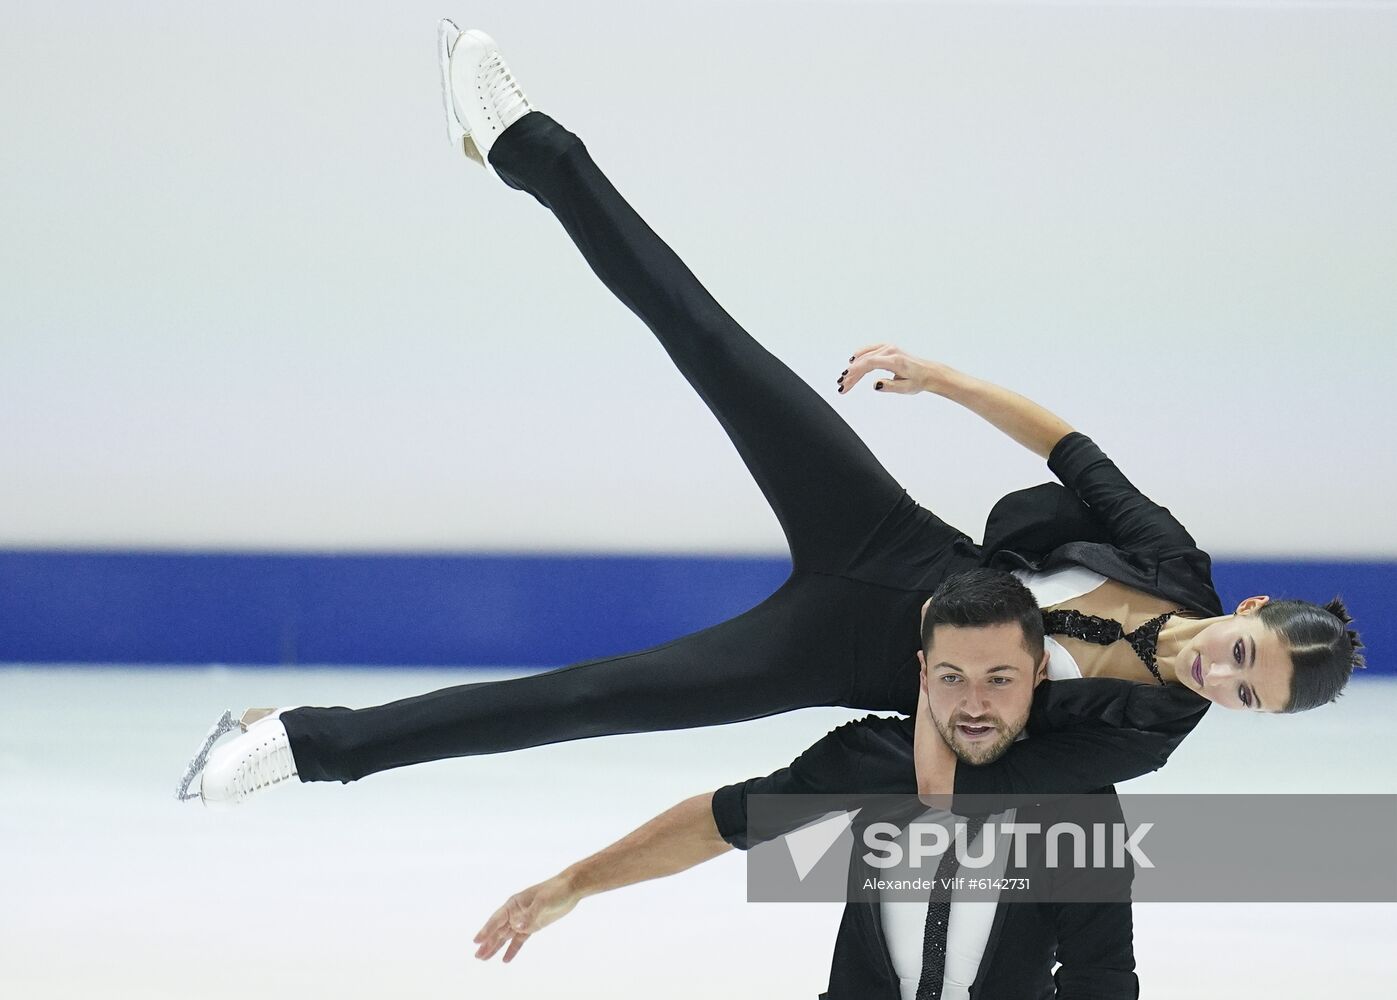 Austria Figure Skating European Championships Ice Dance